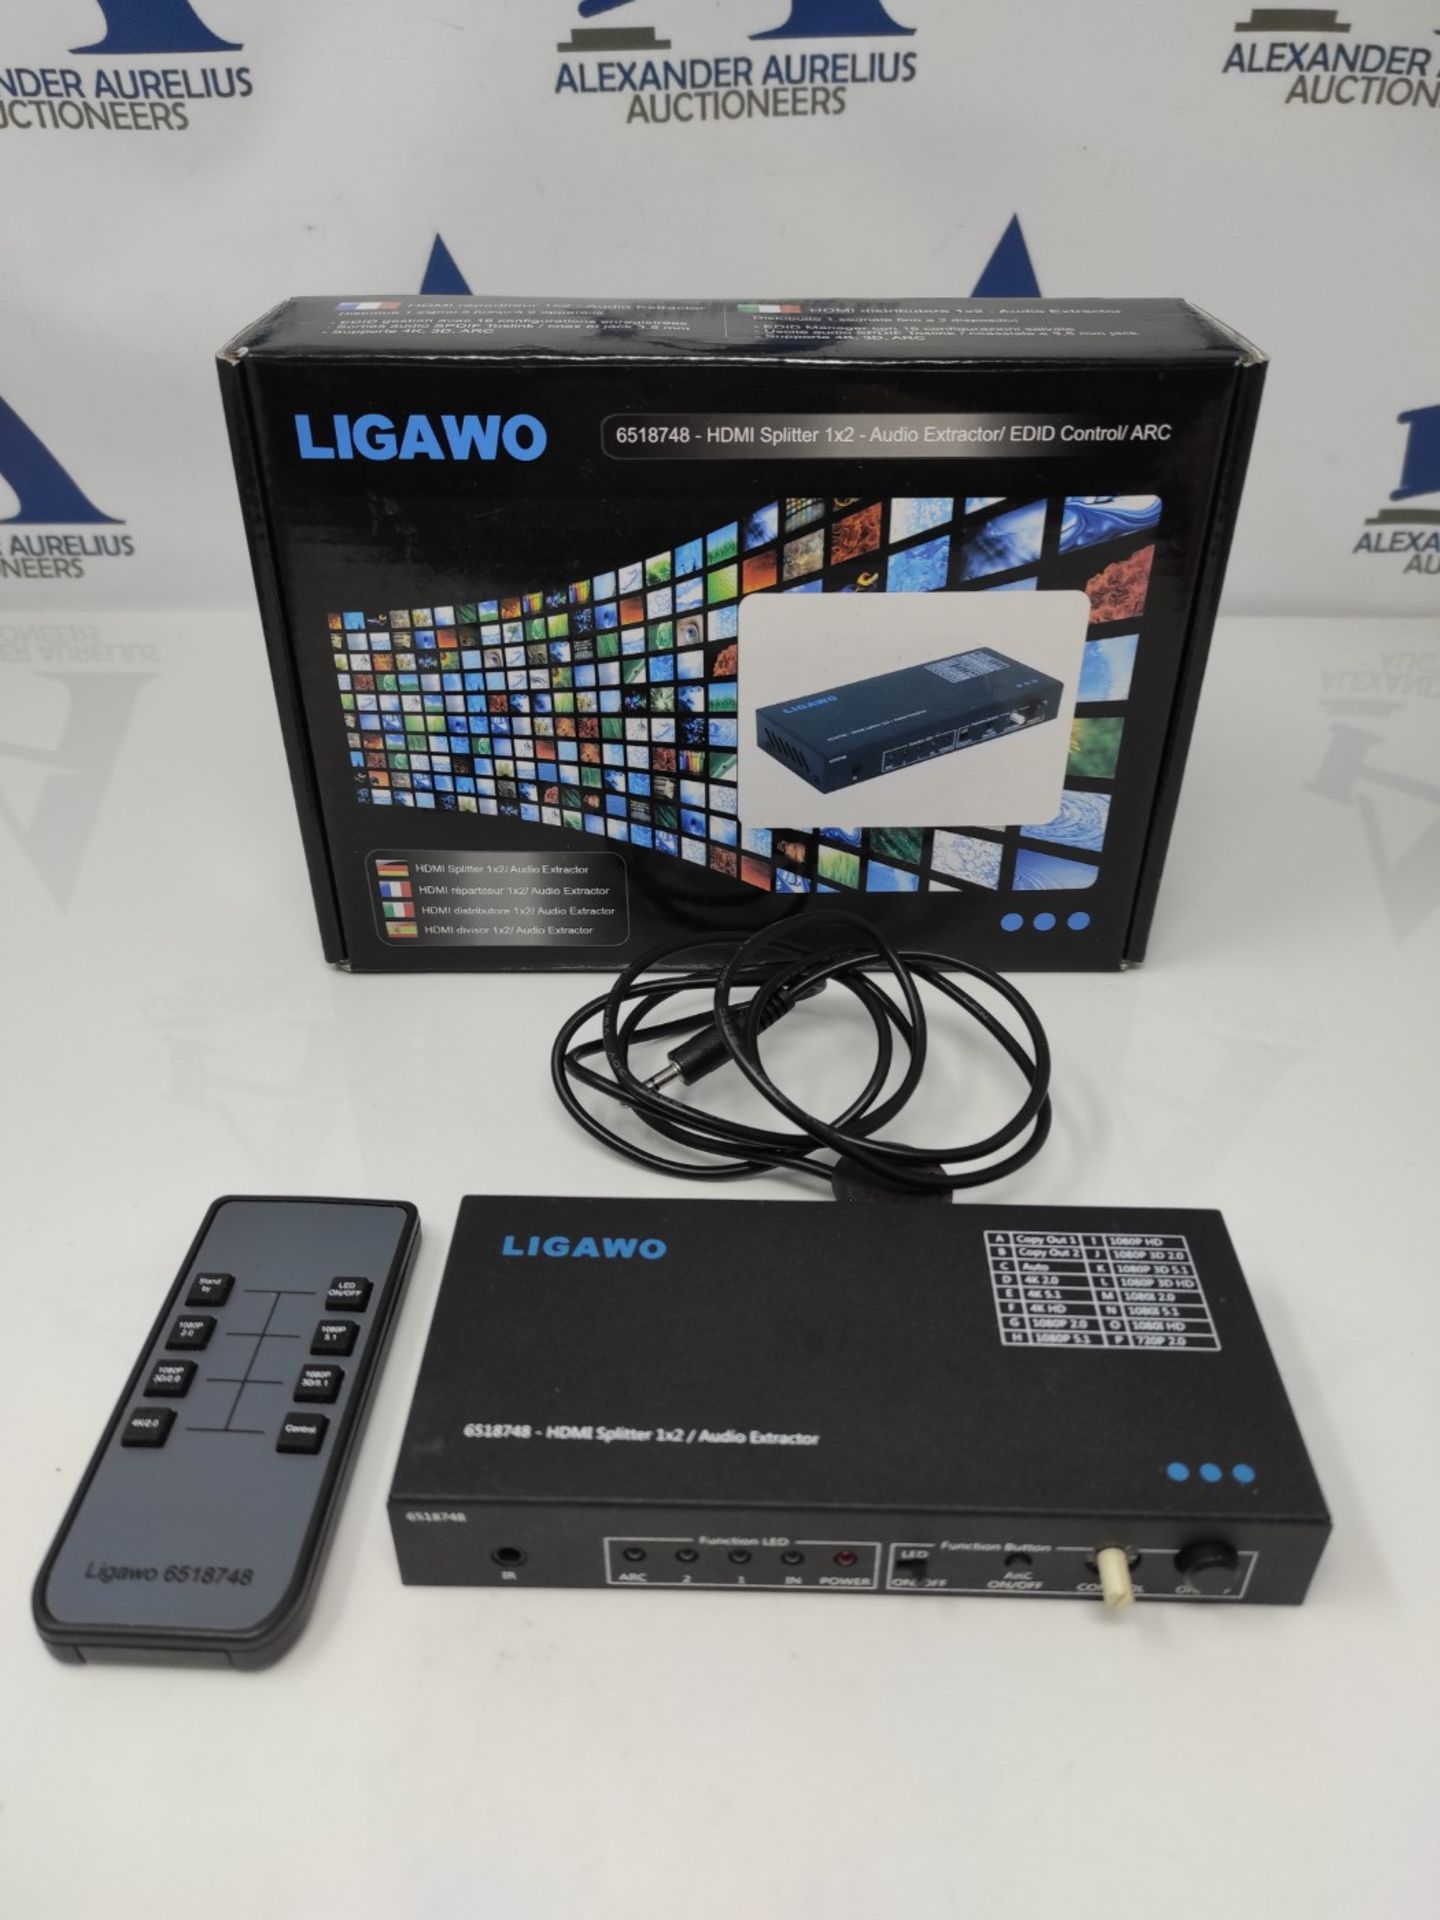 Ligawo 6518748 HDMI Splitter 1x2 Audio Extractor/EDID Control/ARC - Bild 2 aus 2